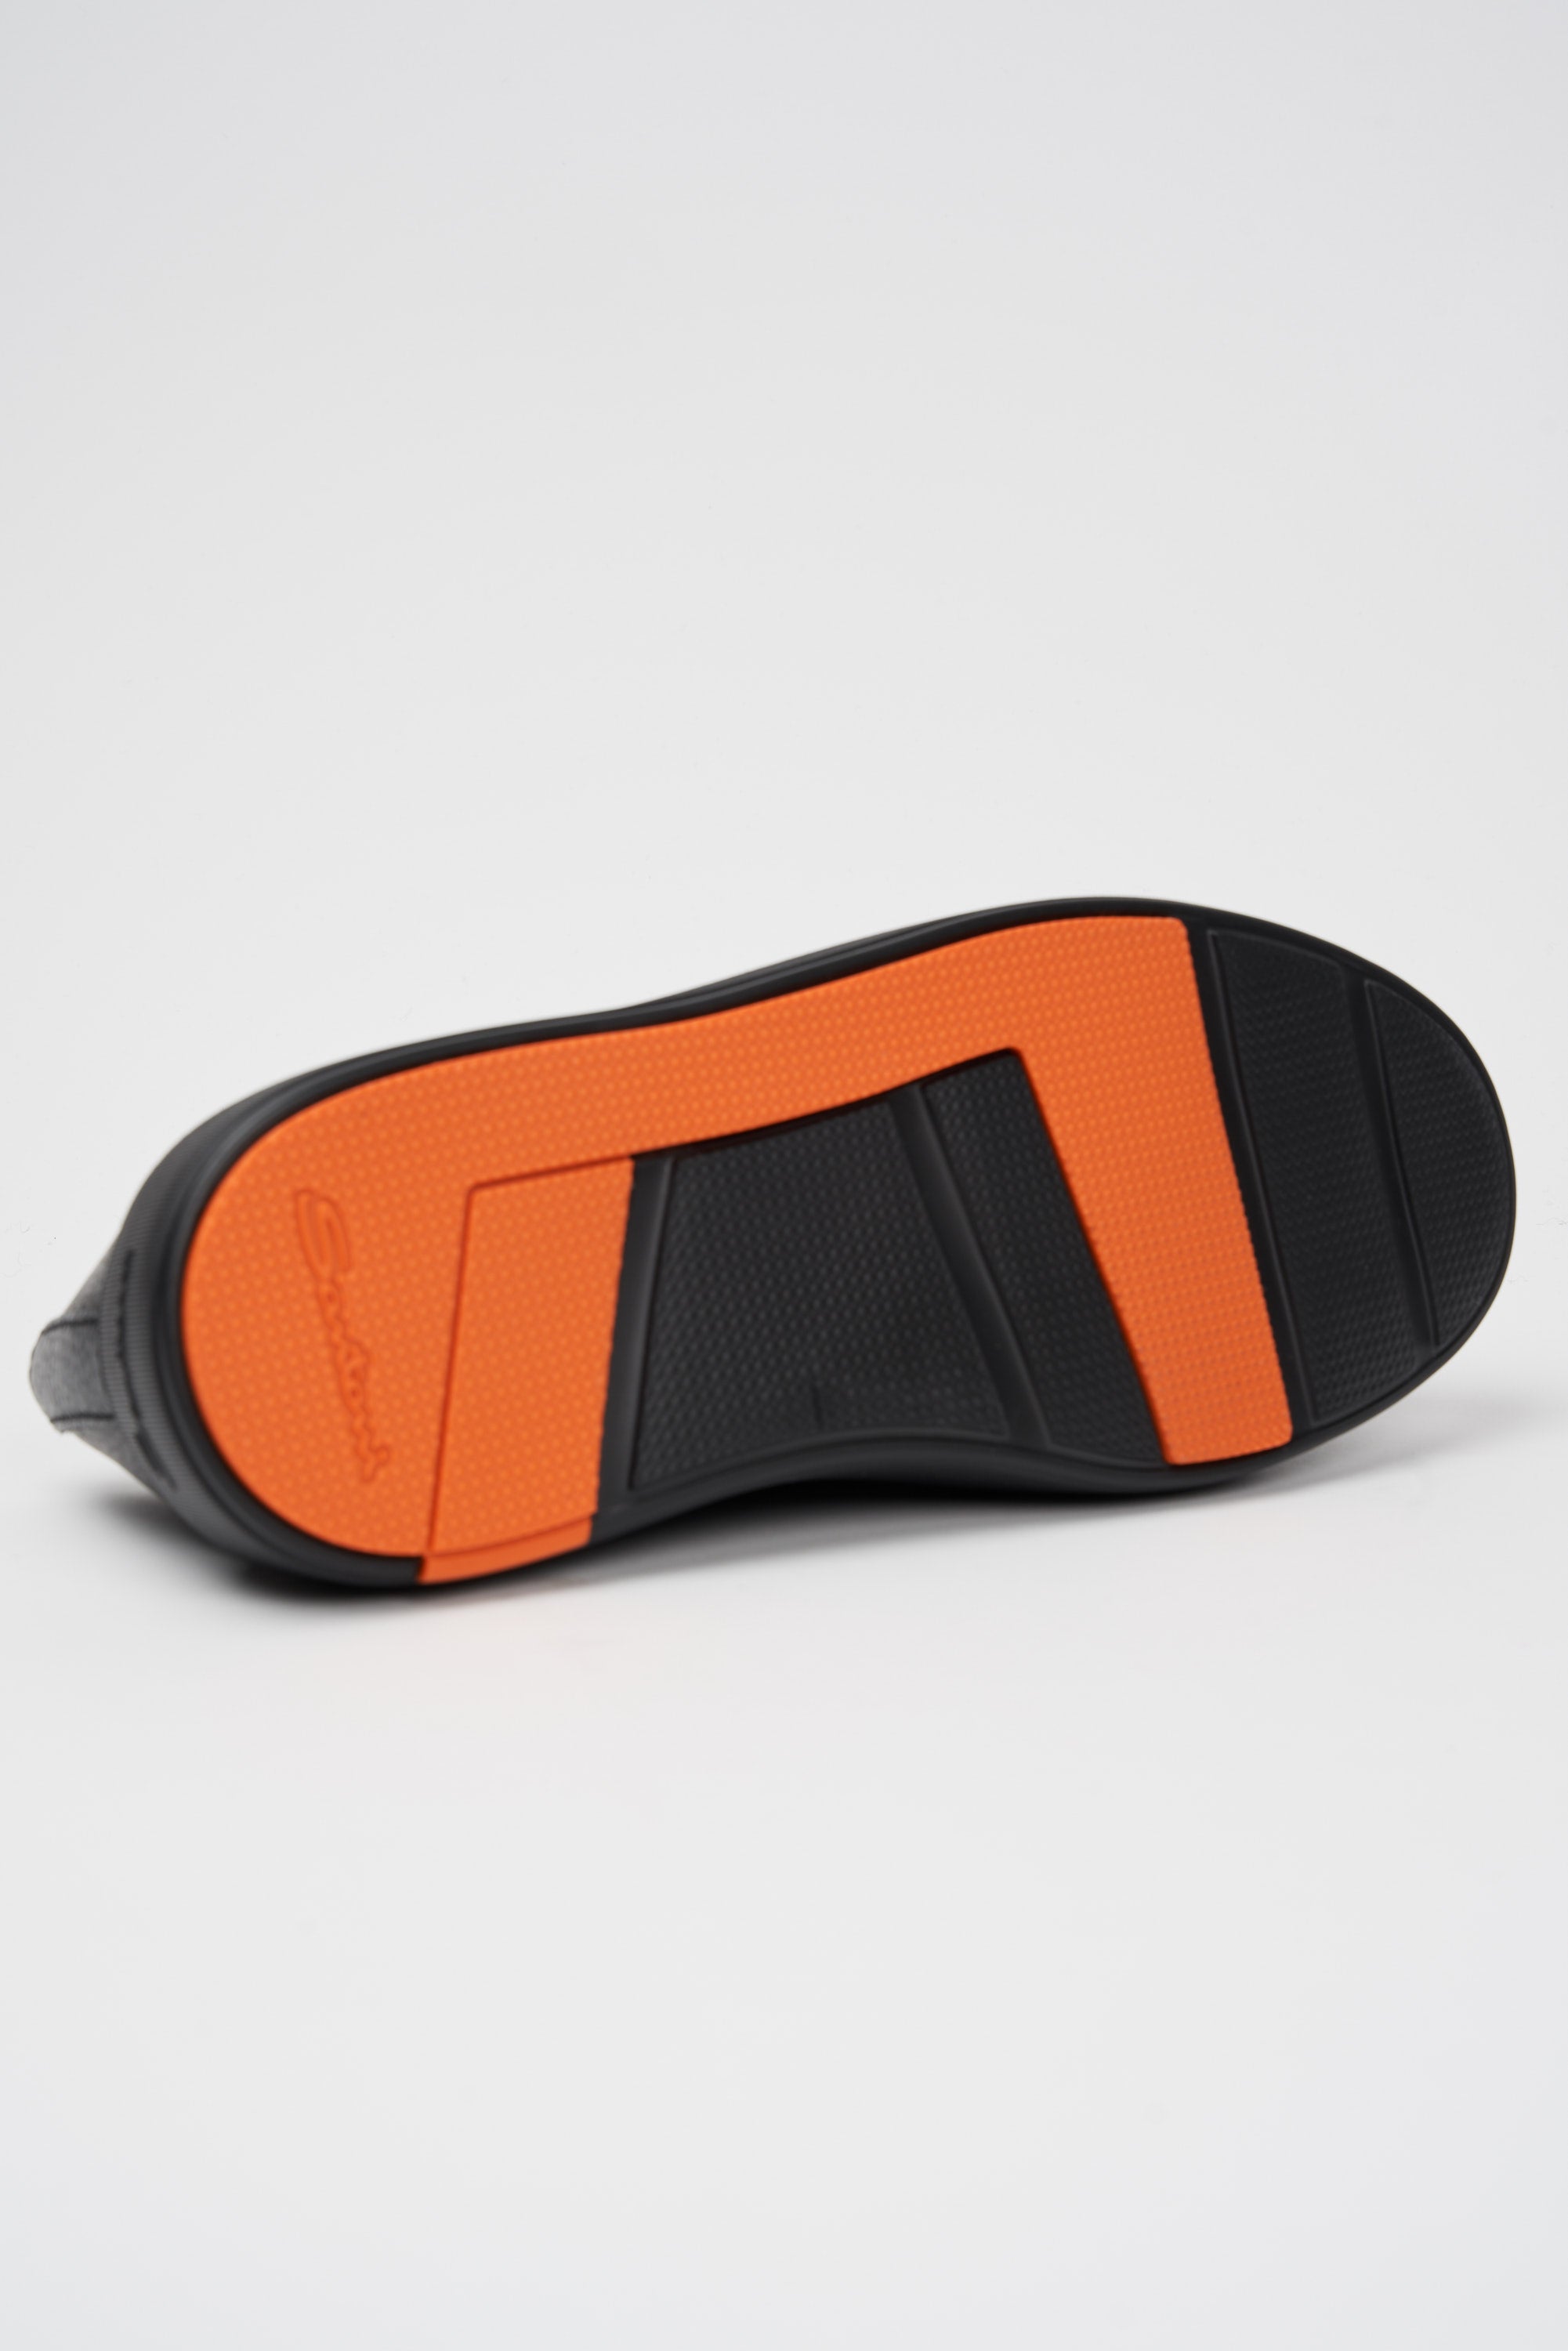 Santoni Leather Sneakers Black-5